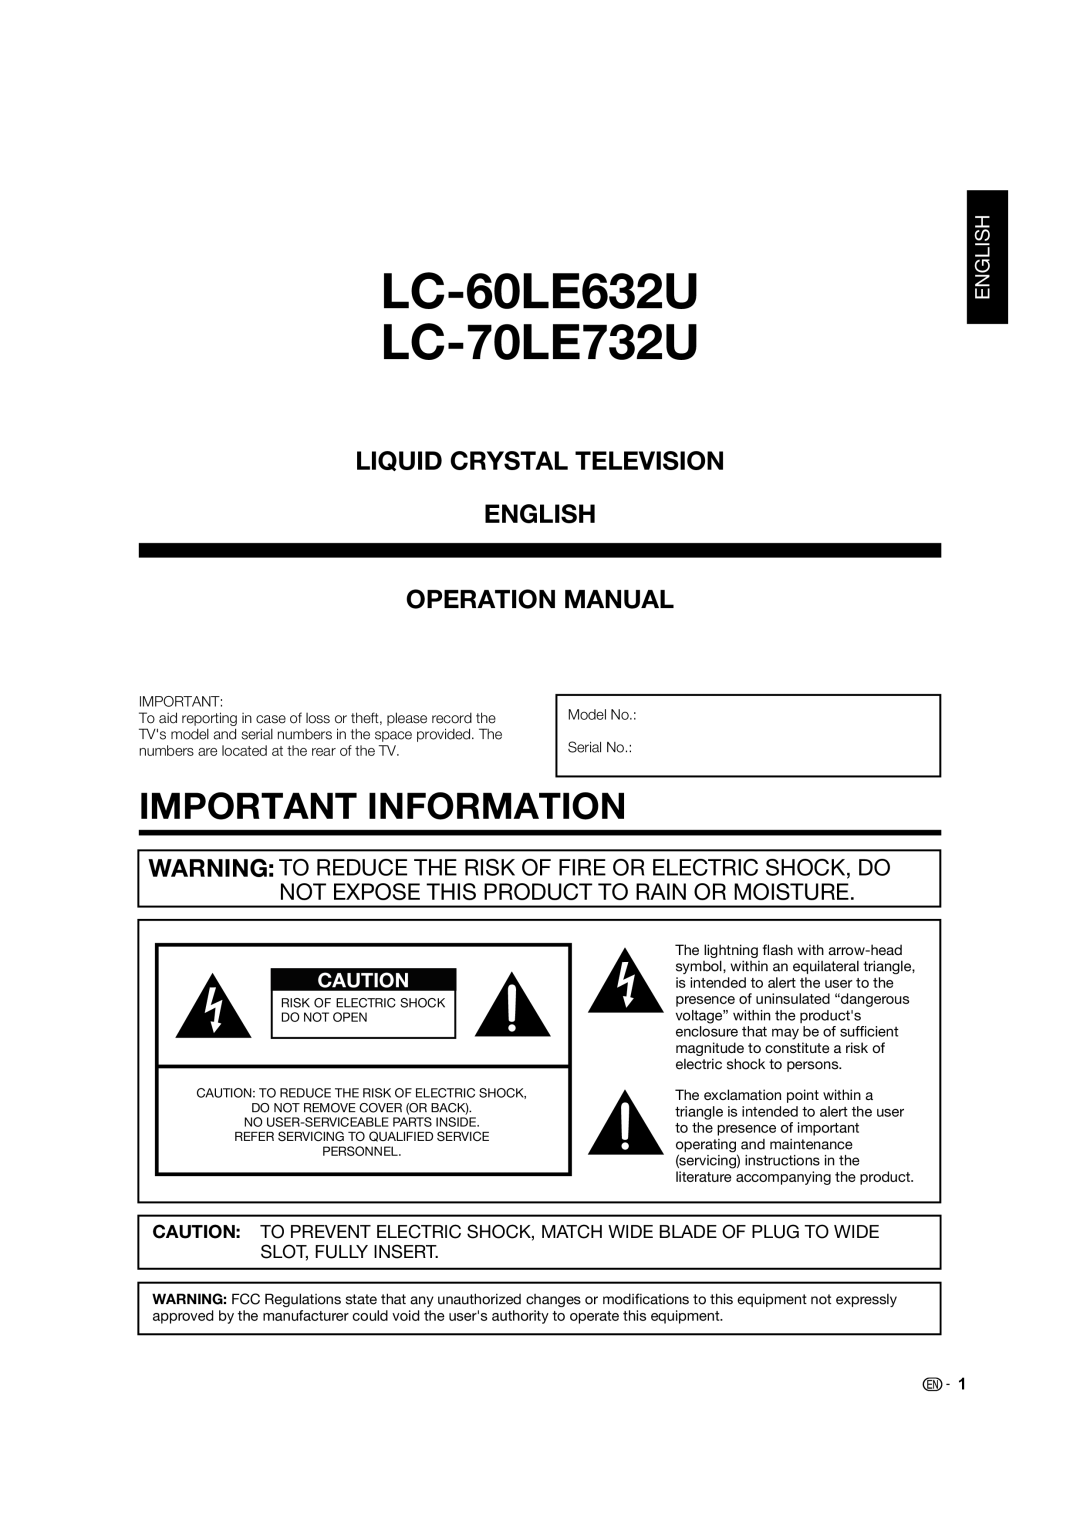 Sharp Important Information, LC-60LE632U LC-70LE732U, Liquid Crystal Television English Operation Manual 